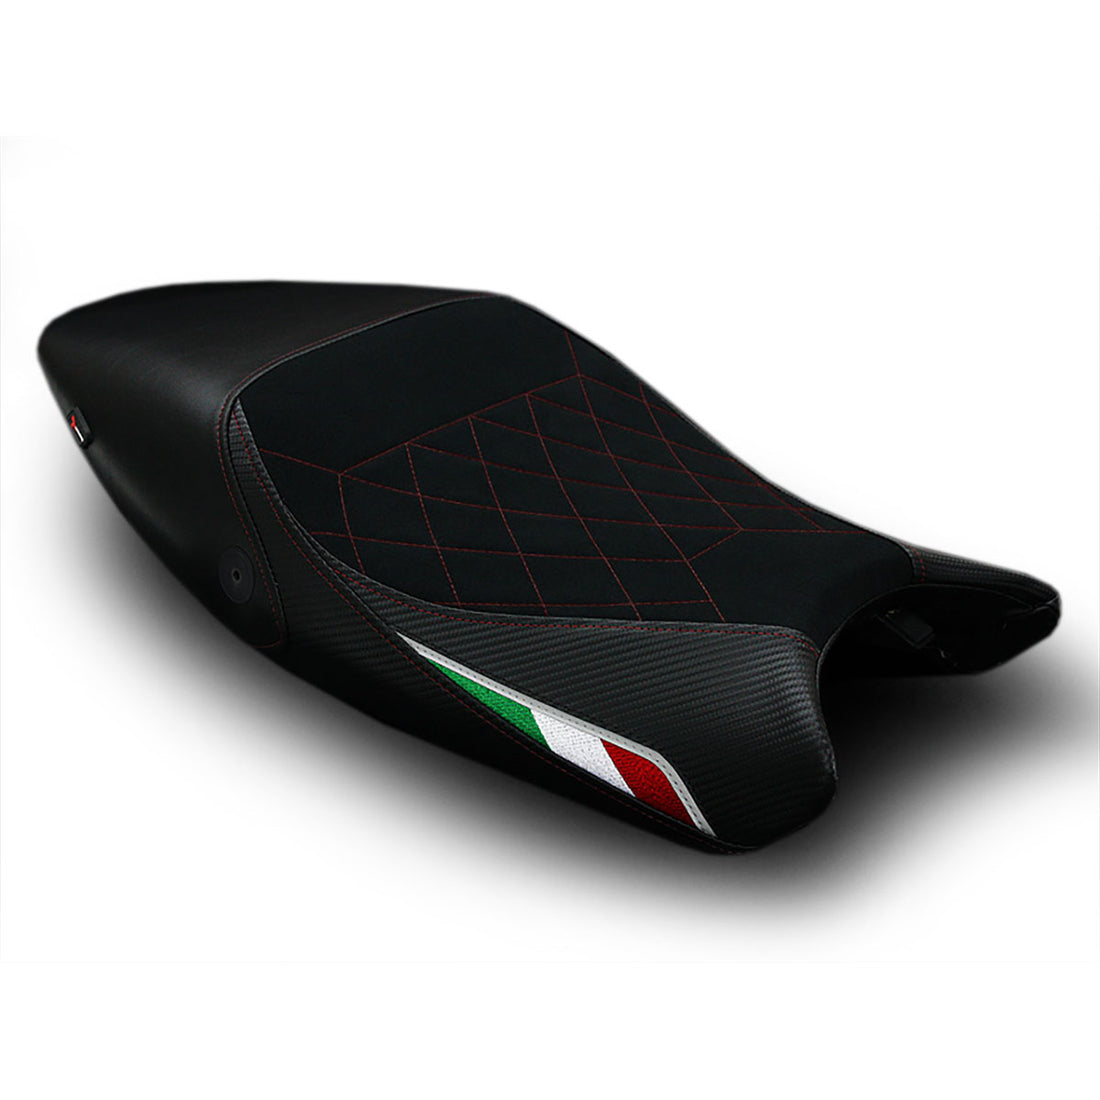 Ducati | Monster 696 08-14, 795 08-14, 796 08-14, 1100 08-14 | Diamond | Rider Seat Cover